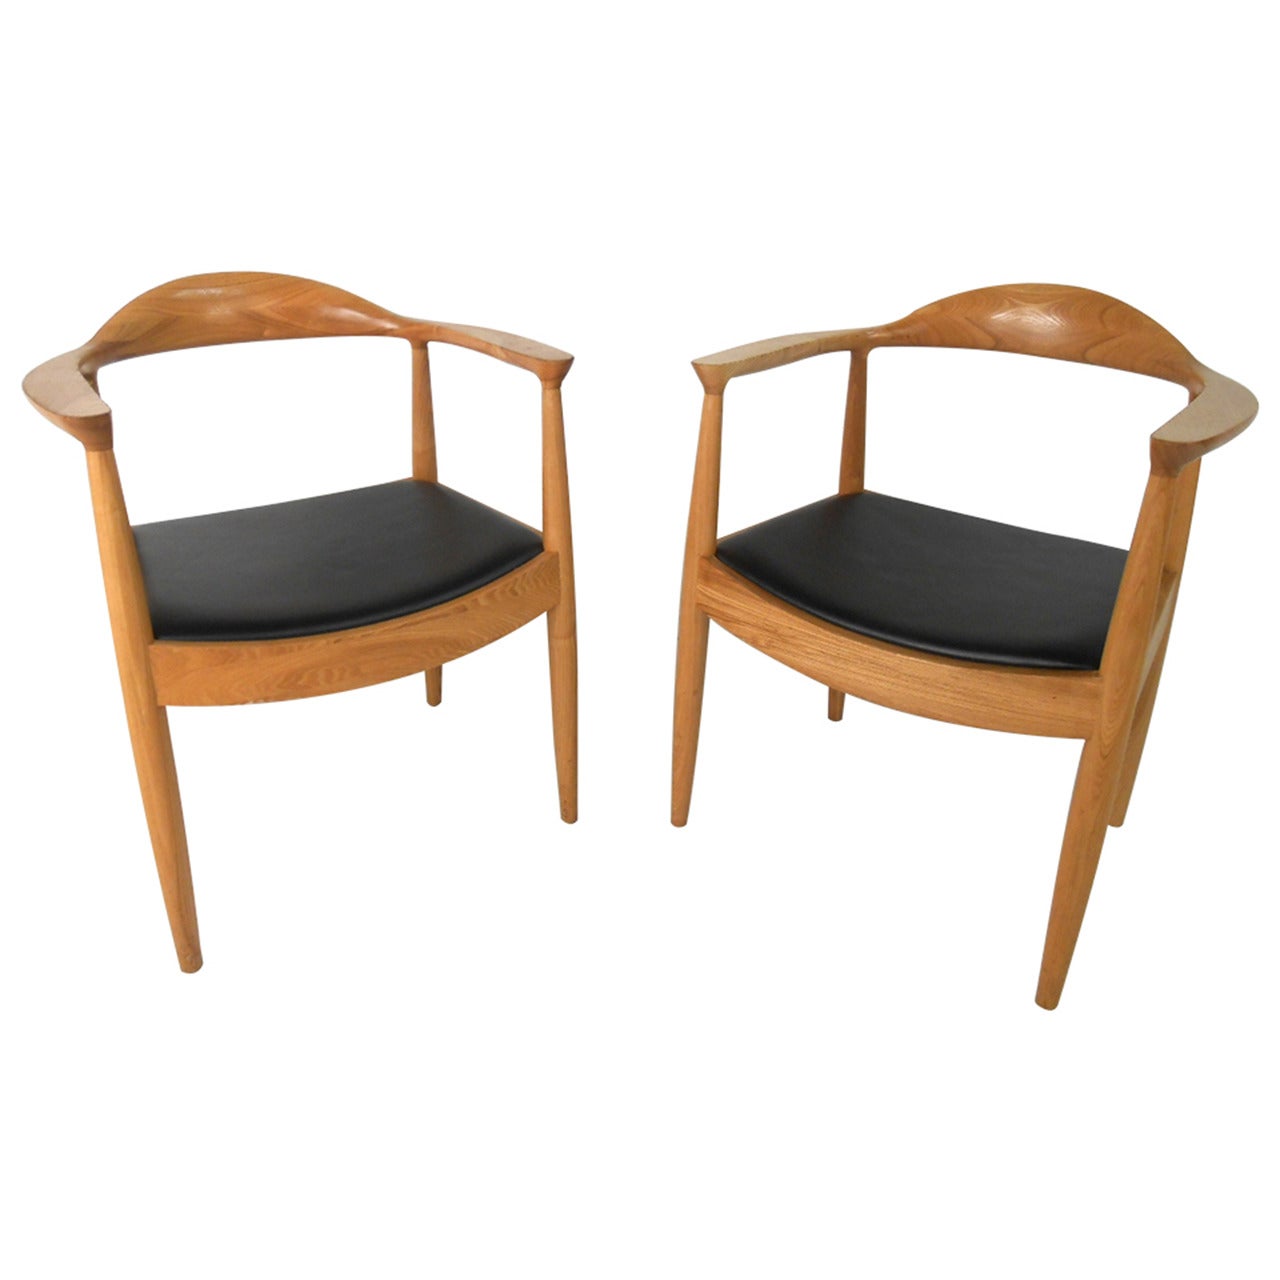 Pair of Mid-Century Modern Hans Wegner "The Chair" Style Armchairs